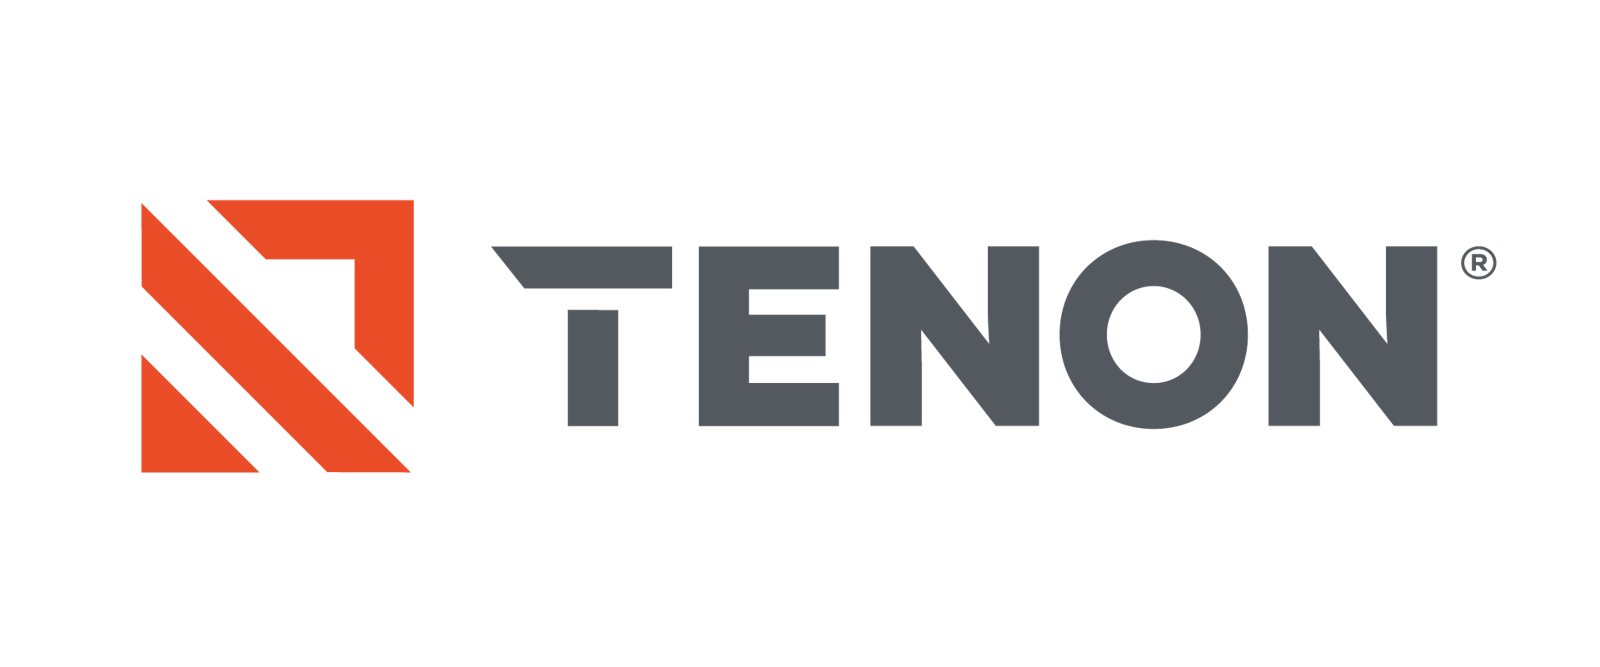 Tenon logo design next to word mark in color on white background